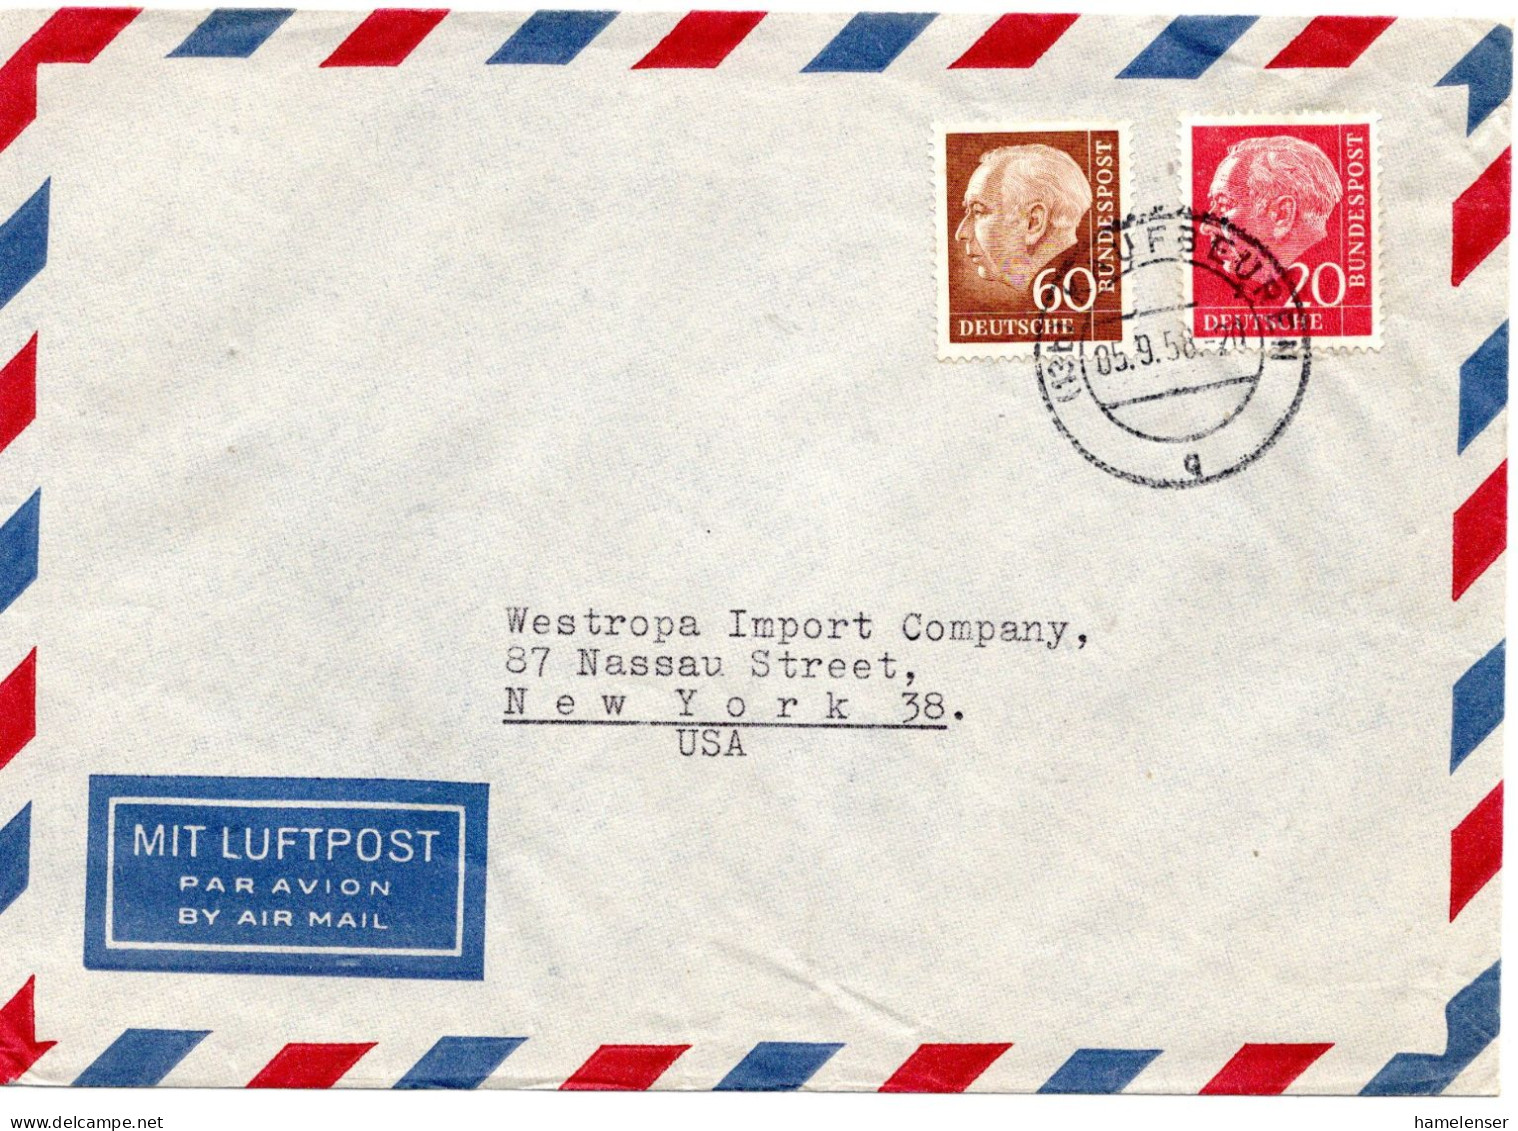 78247 - Bund - 1958 - 60Pfg Heuss II MiF A LpBf KAUFBEUREN -> New York, NY (USA) - Covers & Documents